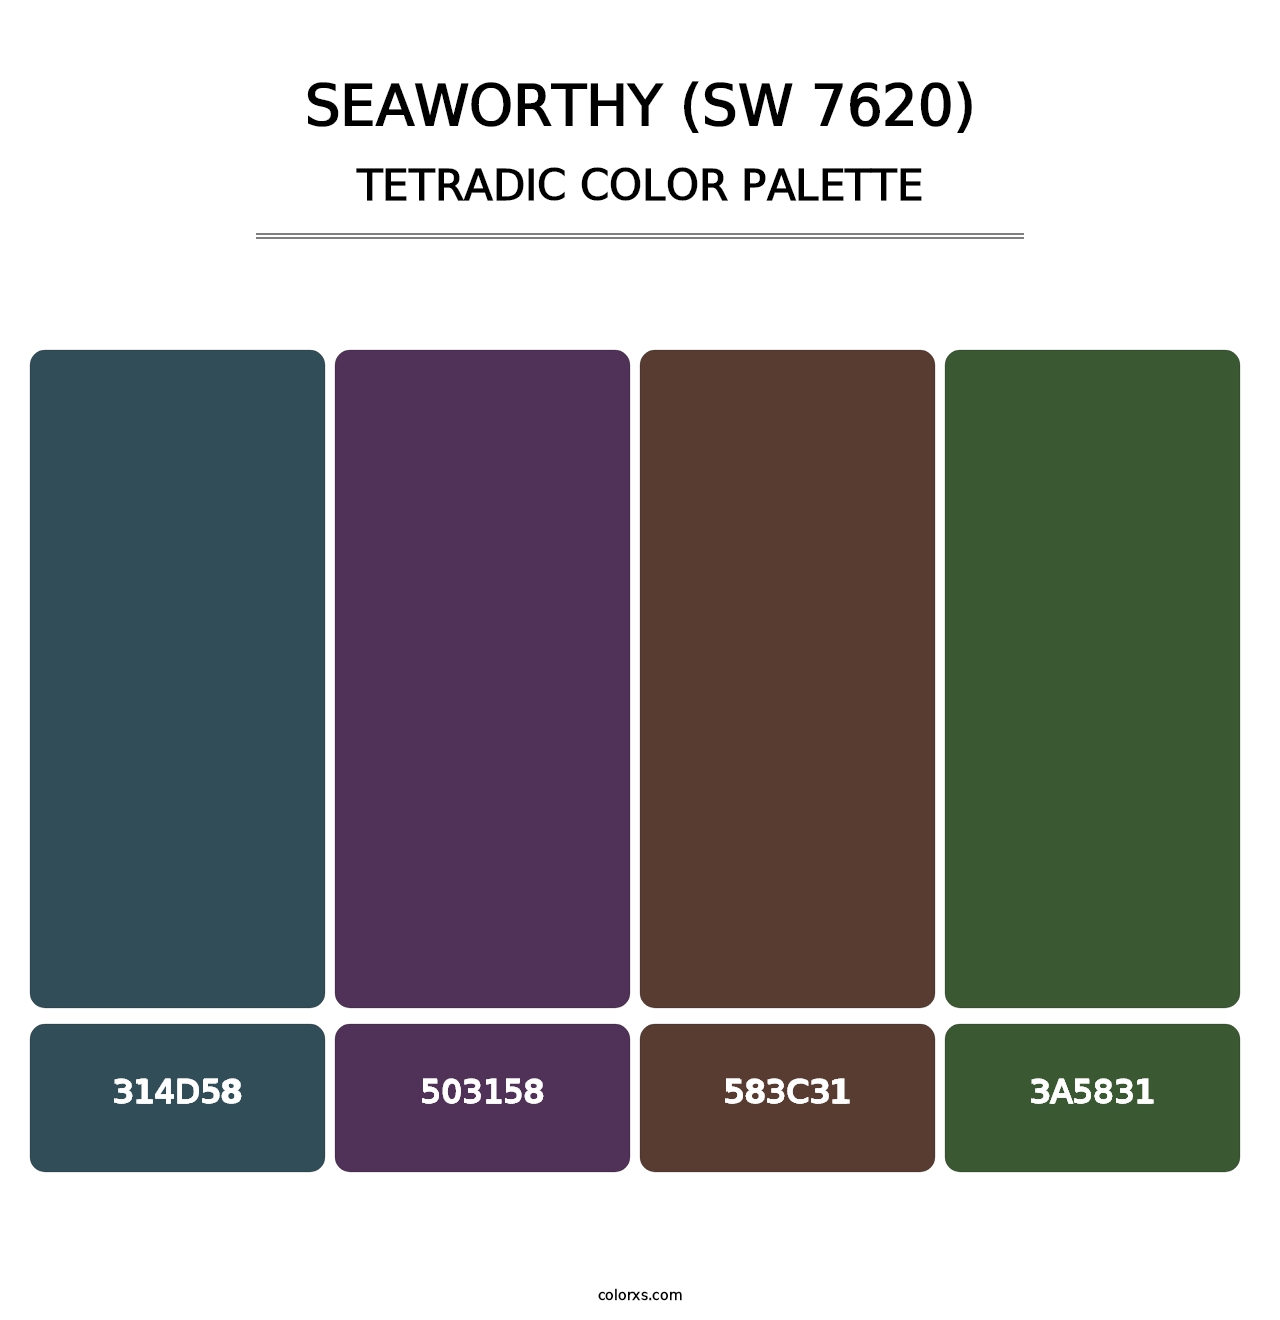 Seaworthy (SW 7620) - Tetradic Color Palette